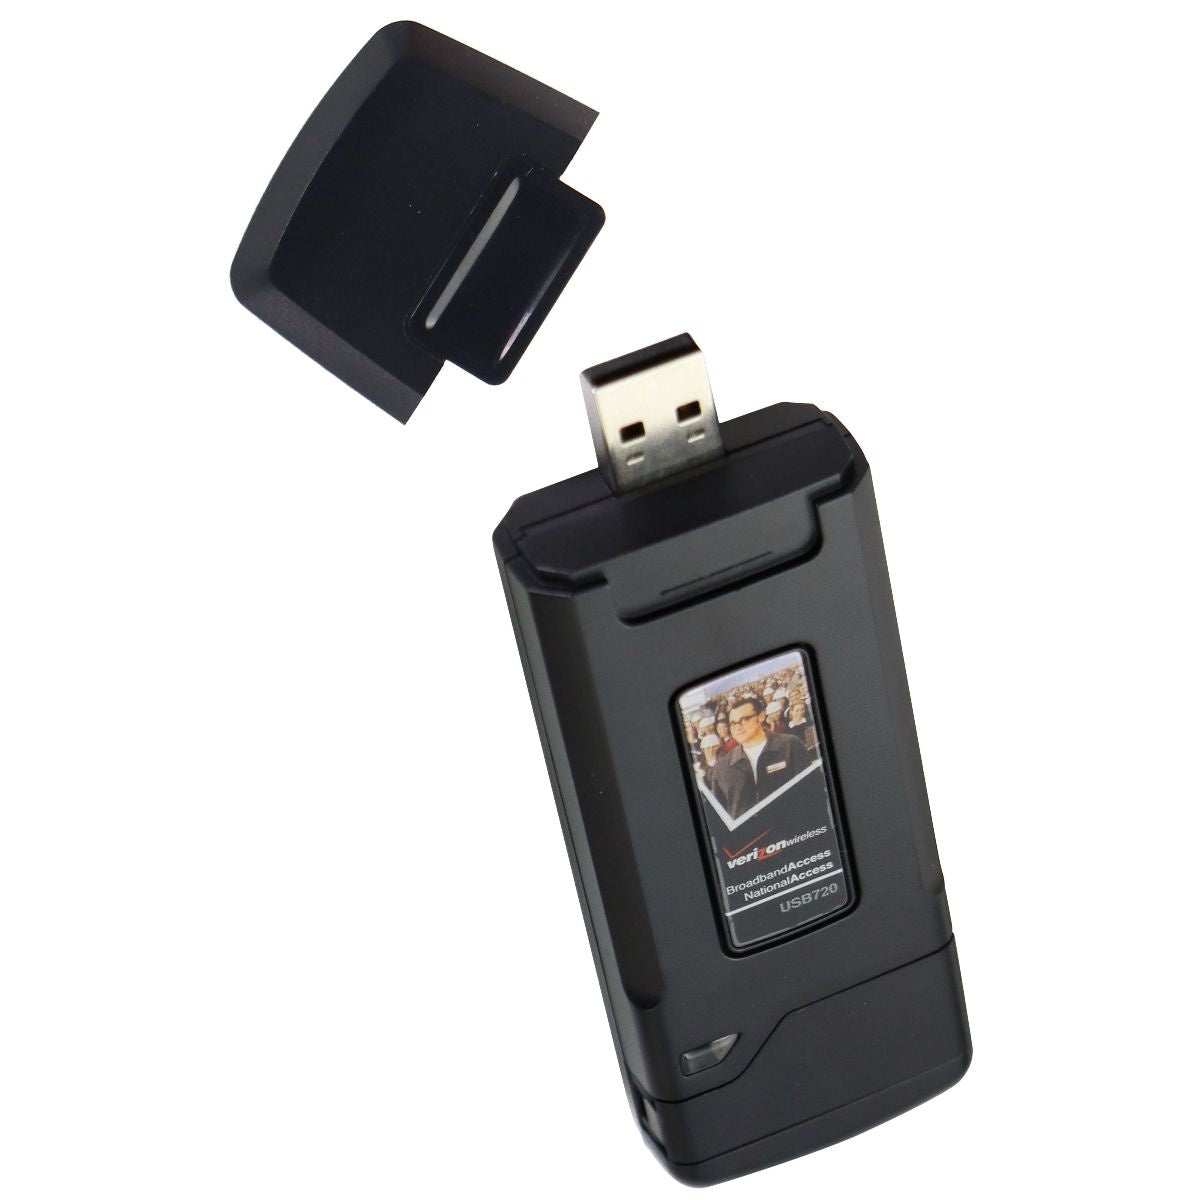 Novatel USB720 Mobile Broadband USB Modem - Verizon Networking - Mobile Broadband Devices Novatel Wireless    - Simple Cell Bulk Wholesale Pricing - USA Seller